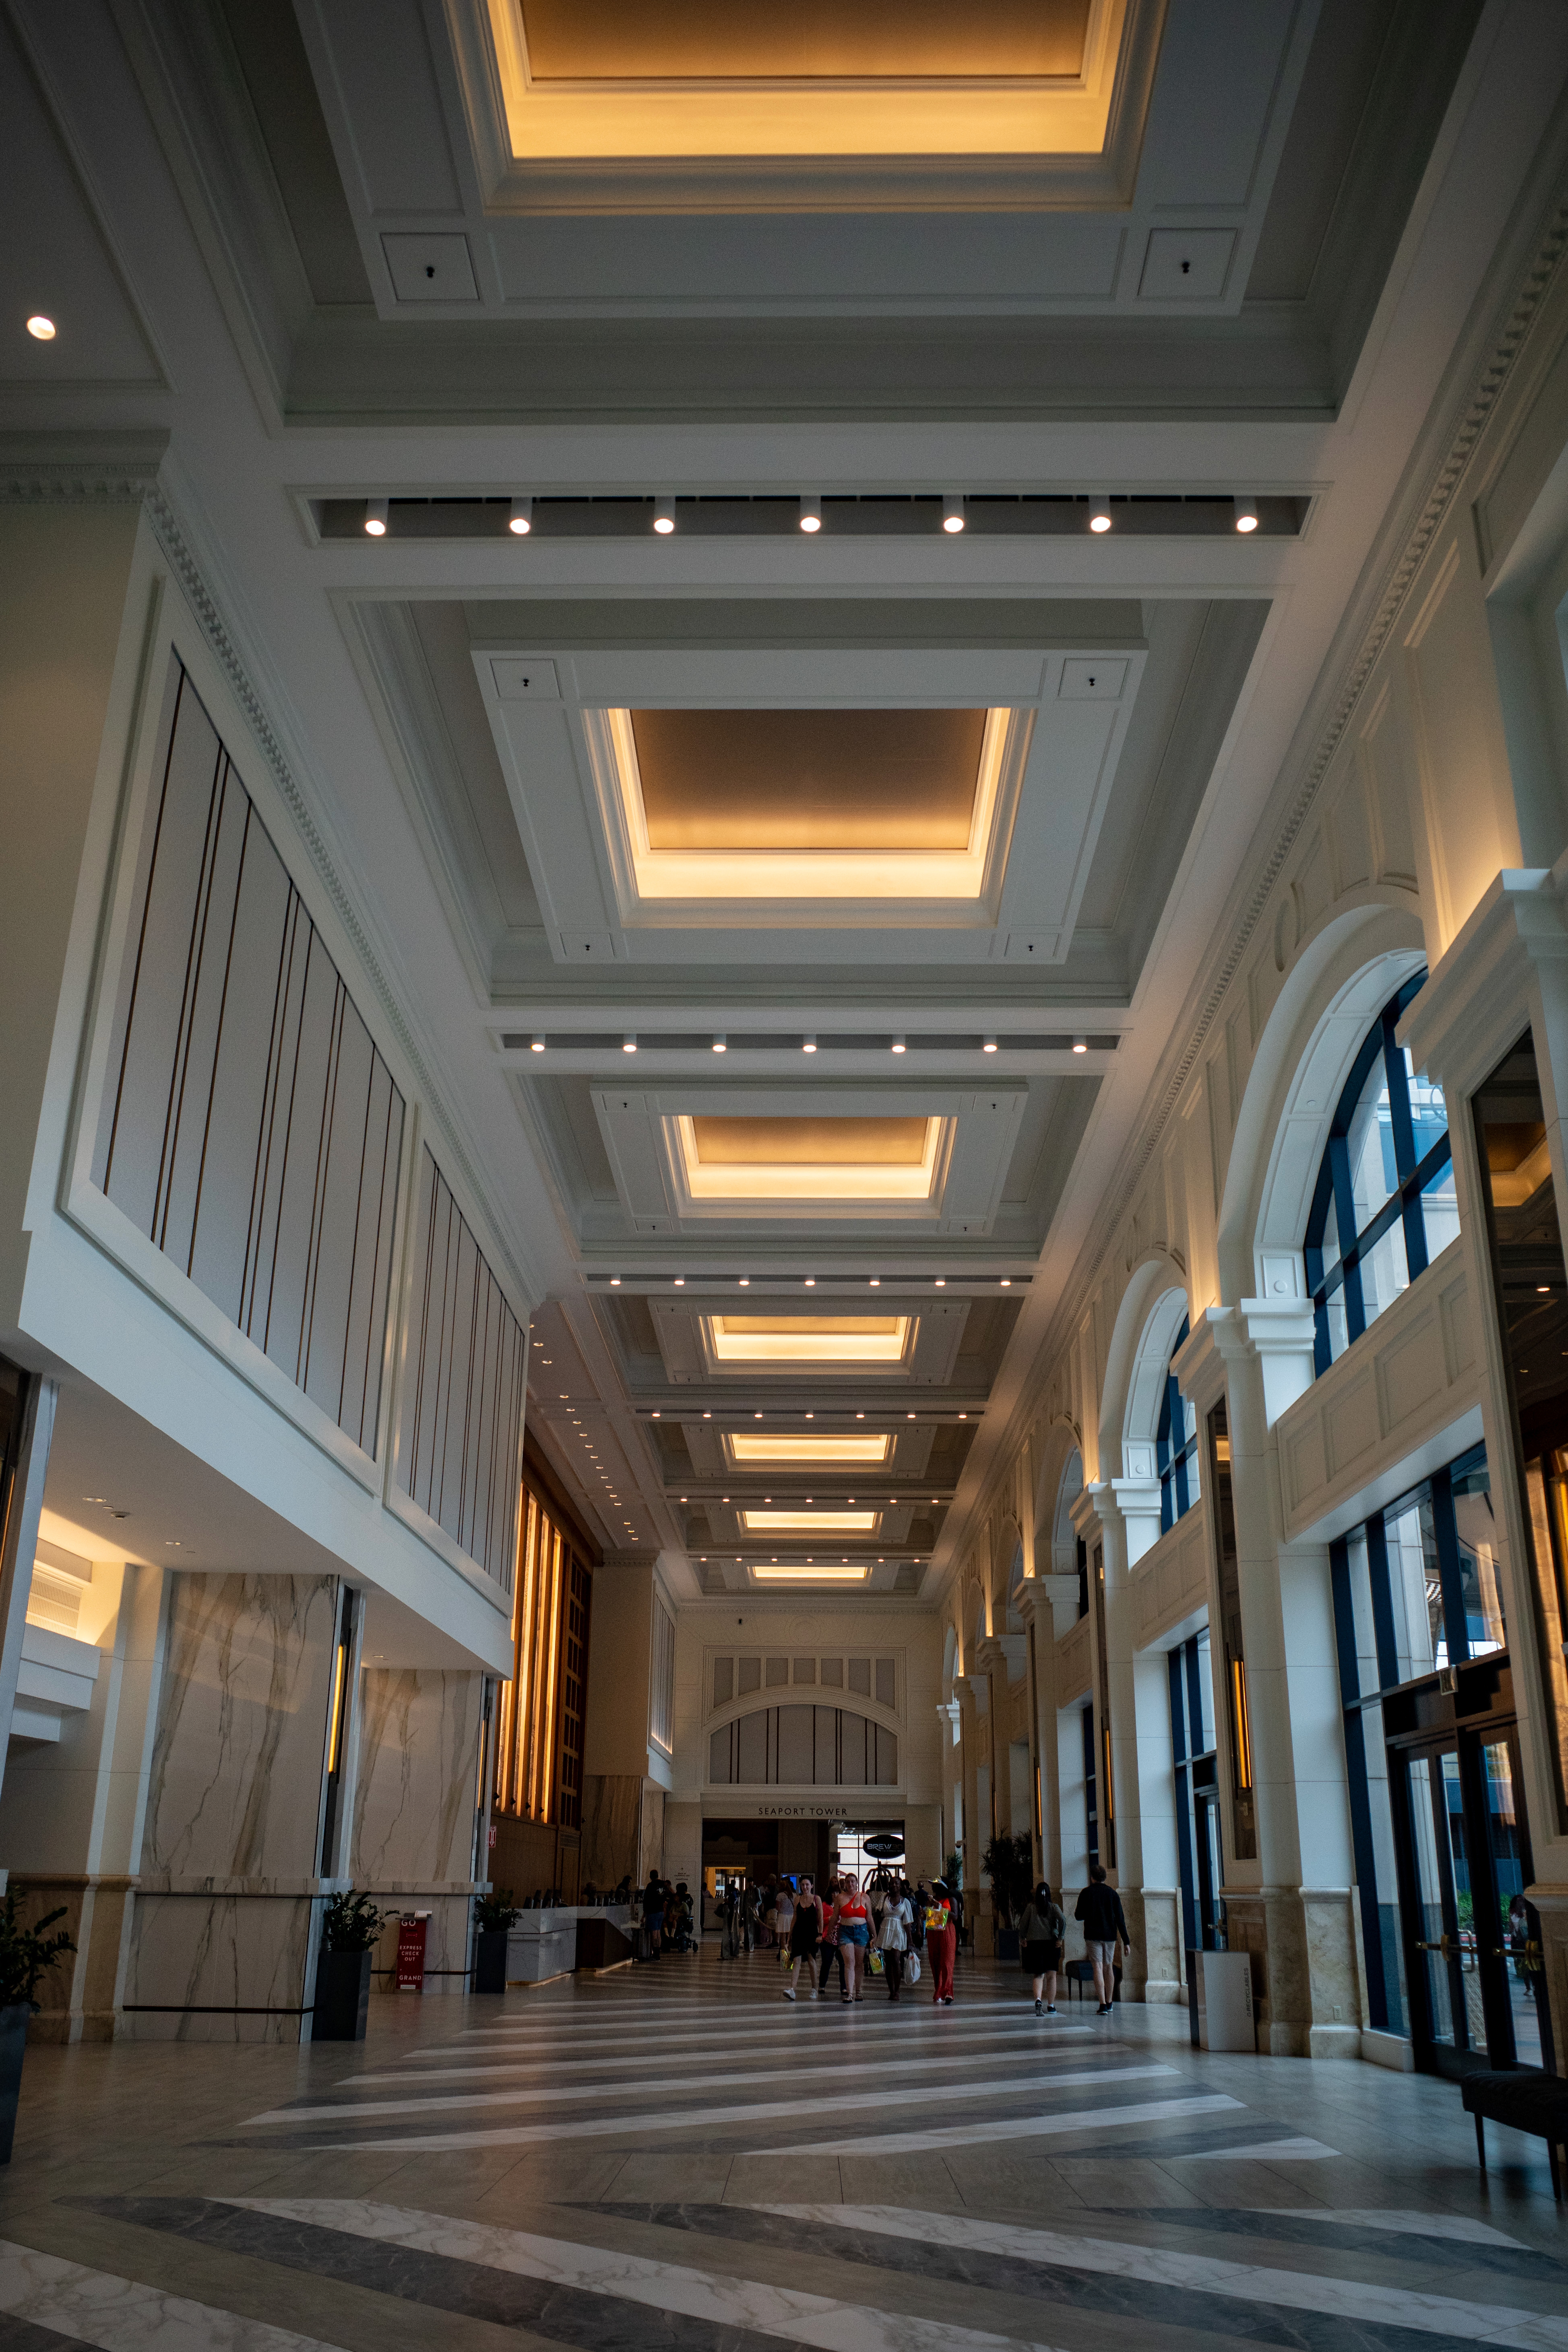 Interior lobby of Manchester Grand Hyatt in San Diego